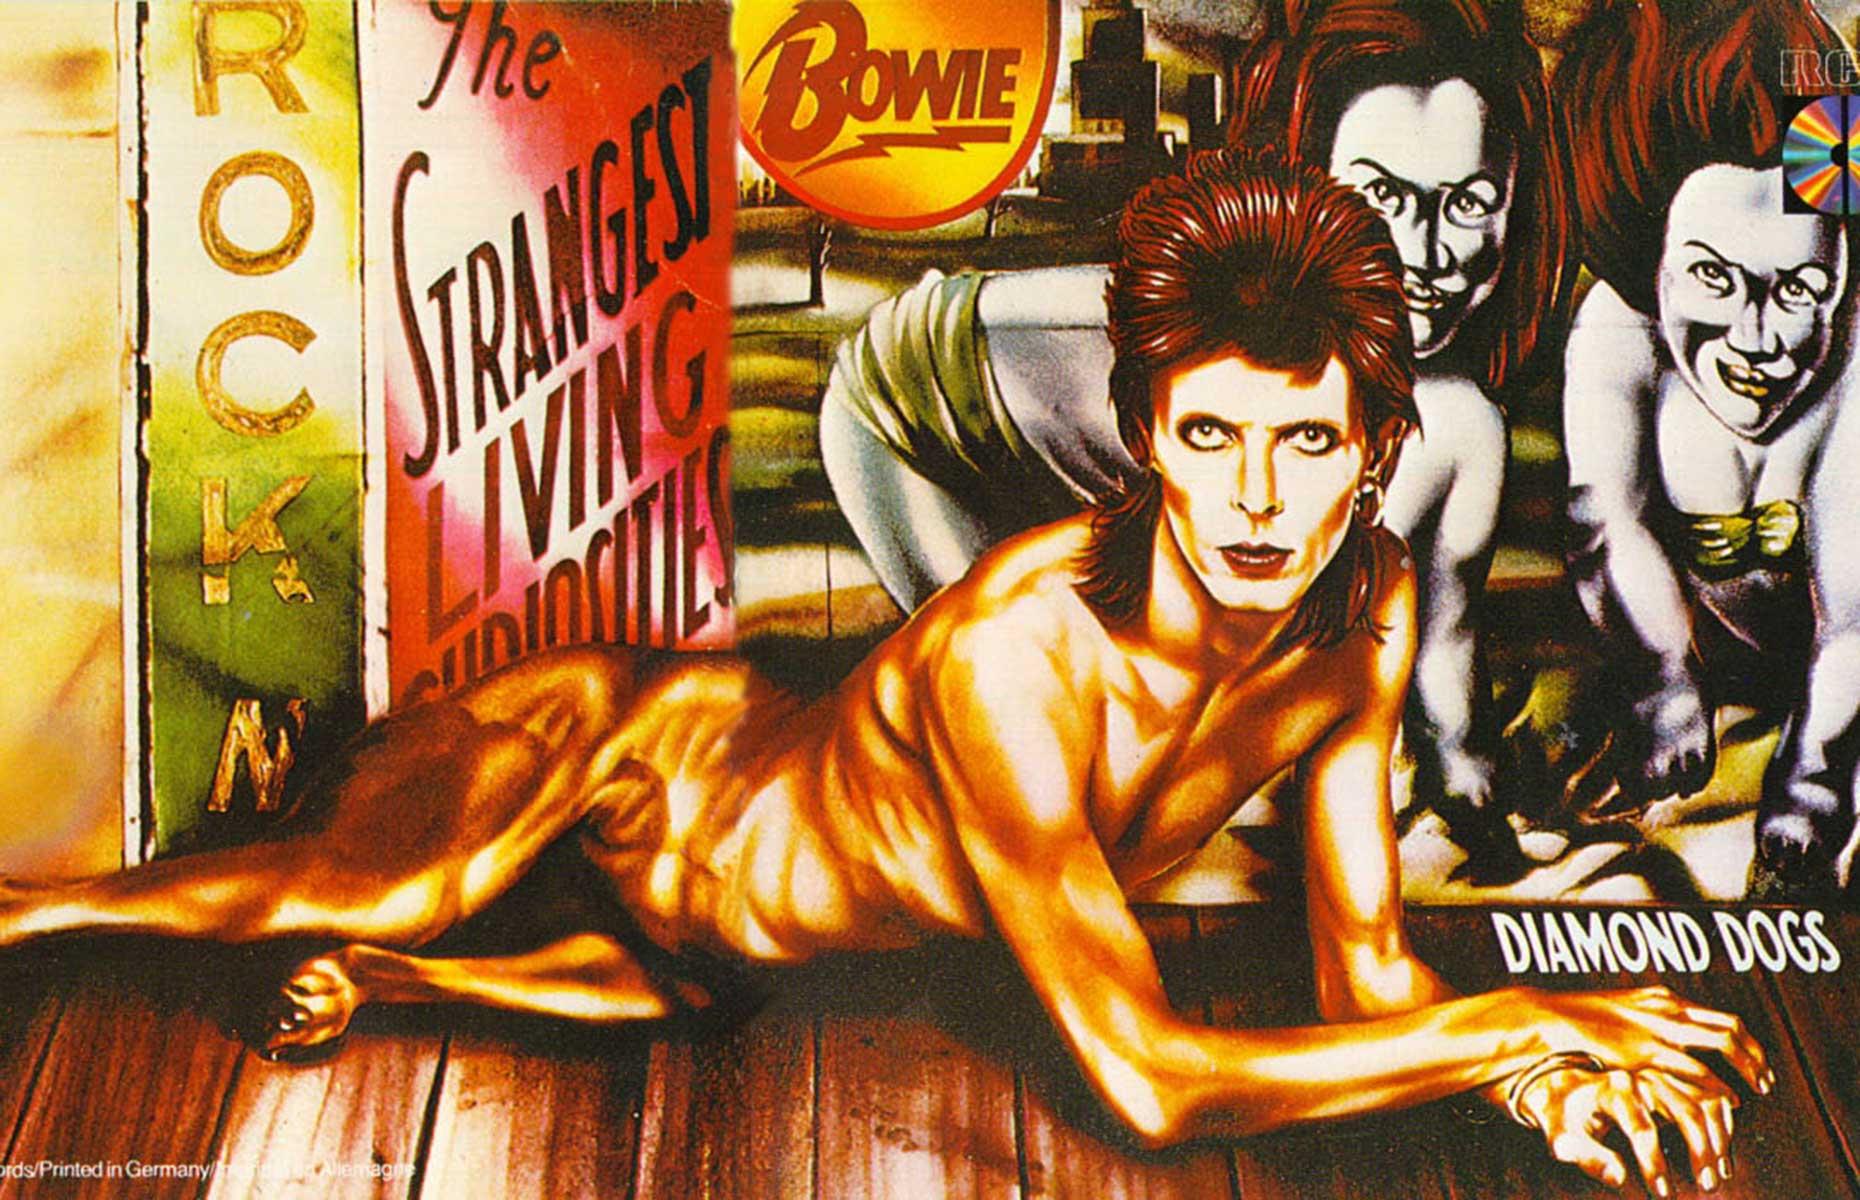 David Bowie – Diamond Dogs: up to £3,700